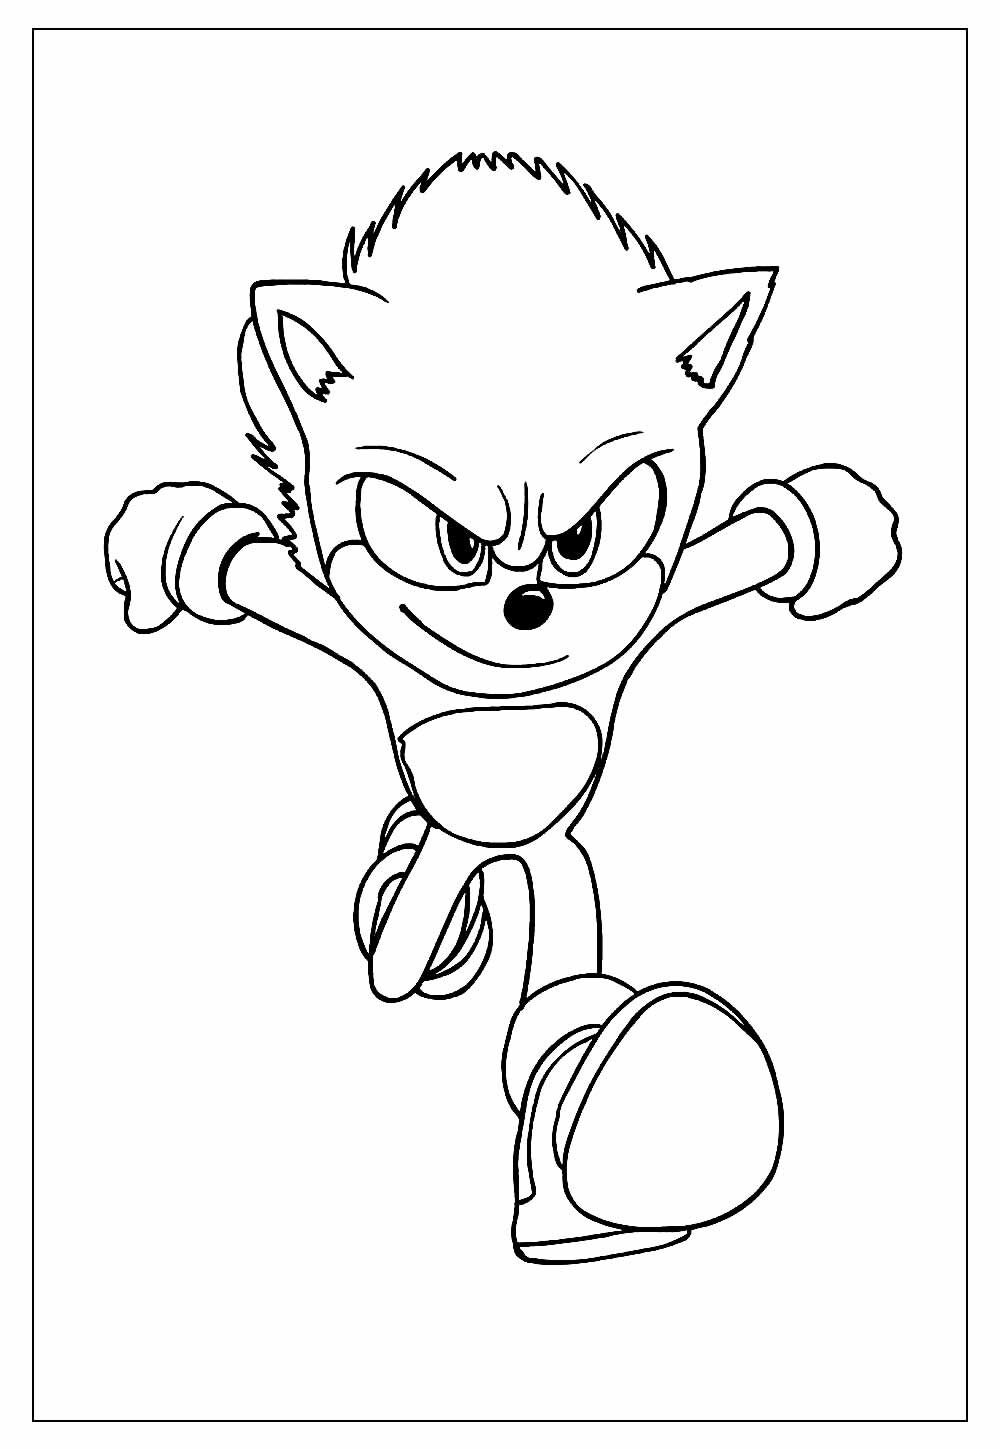 Desenhos de Sonic para colorir · Creative Fabrica